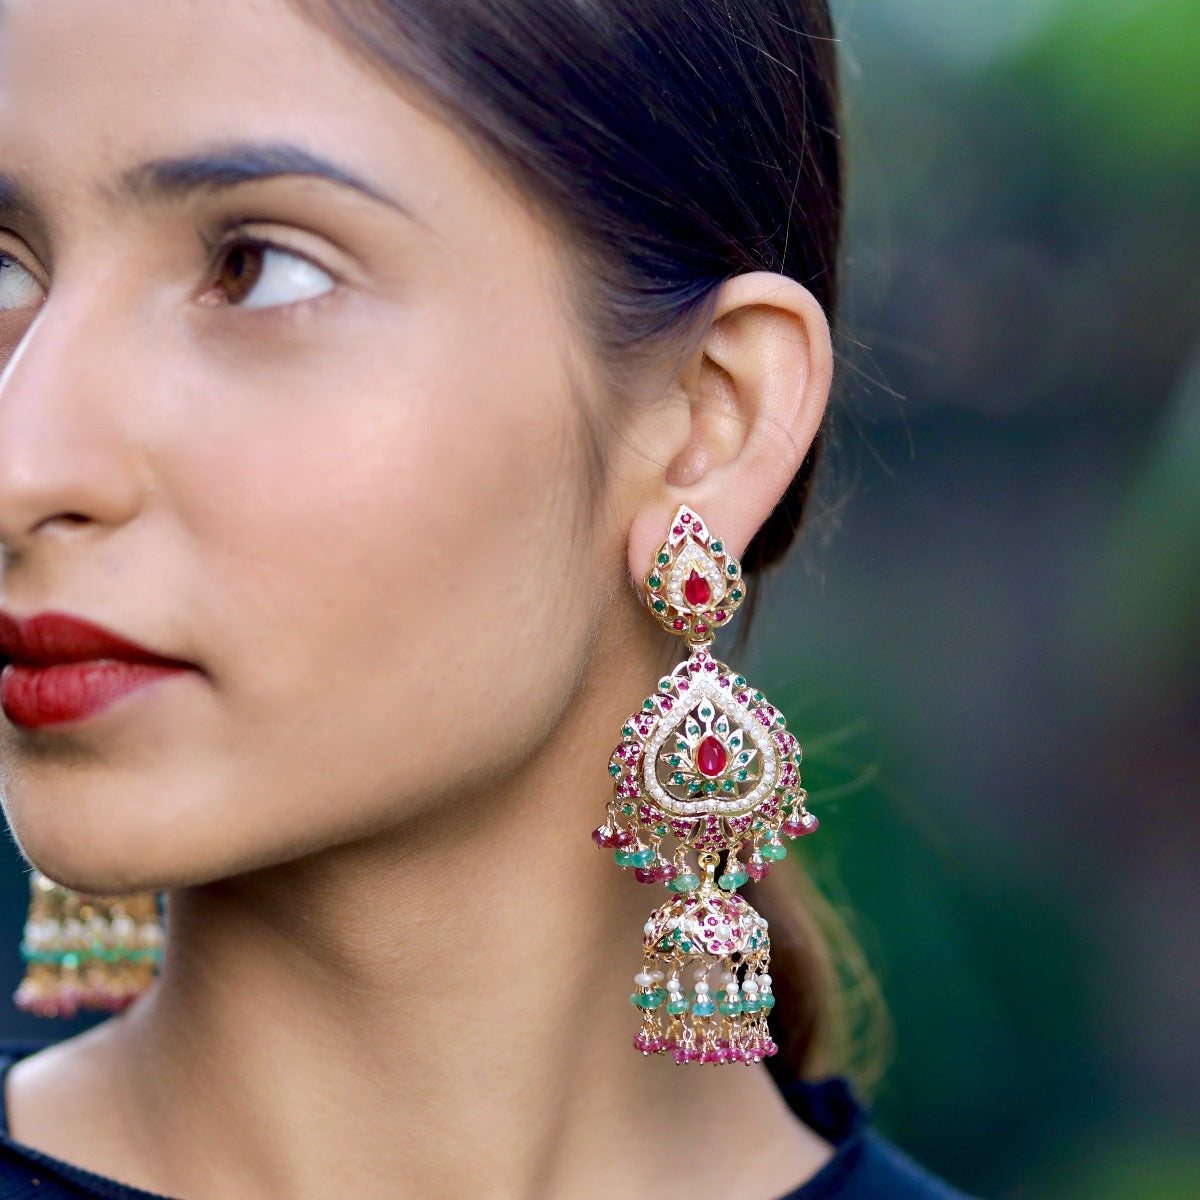 rajasthani earrings with jhumka at bottom